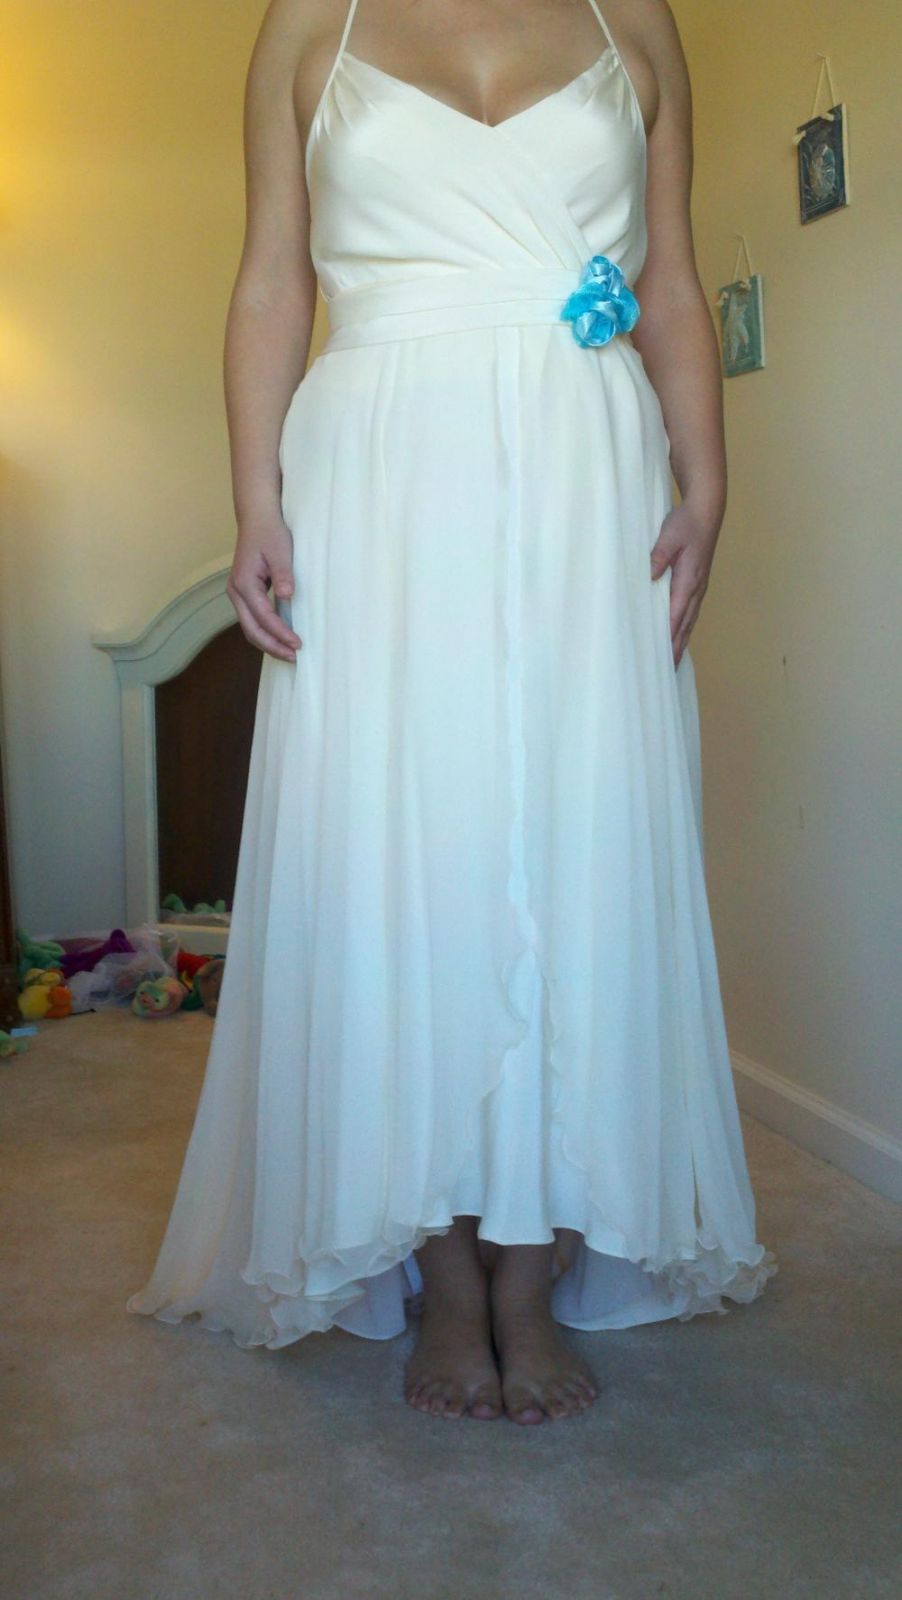 Wedding Dress Size 12 - Never Worn